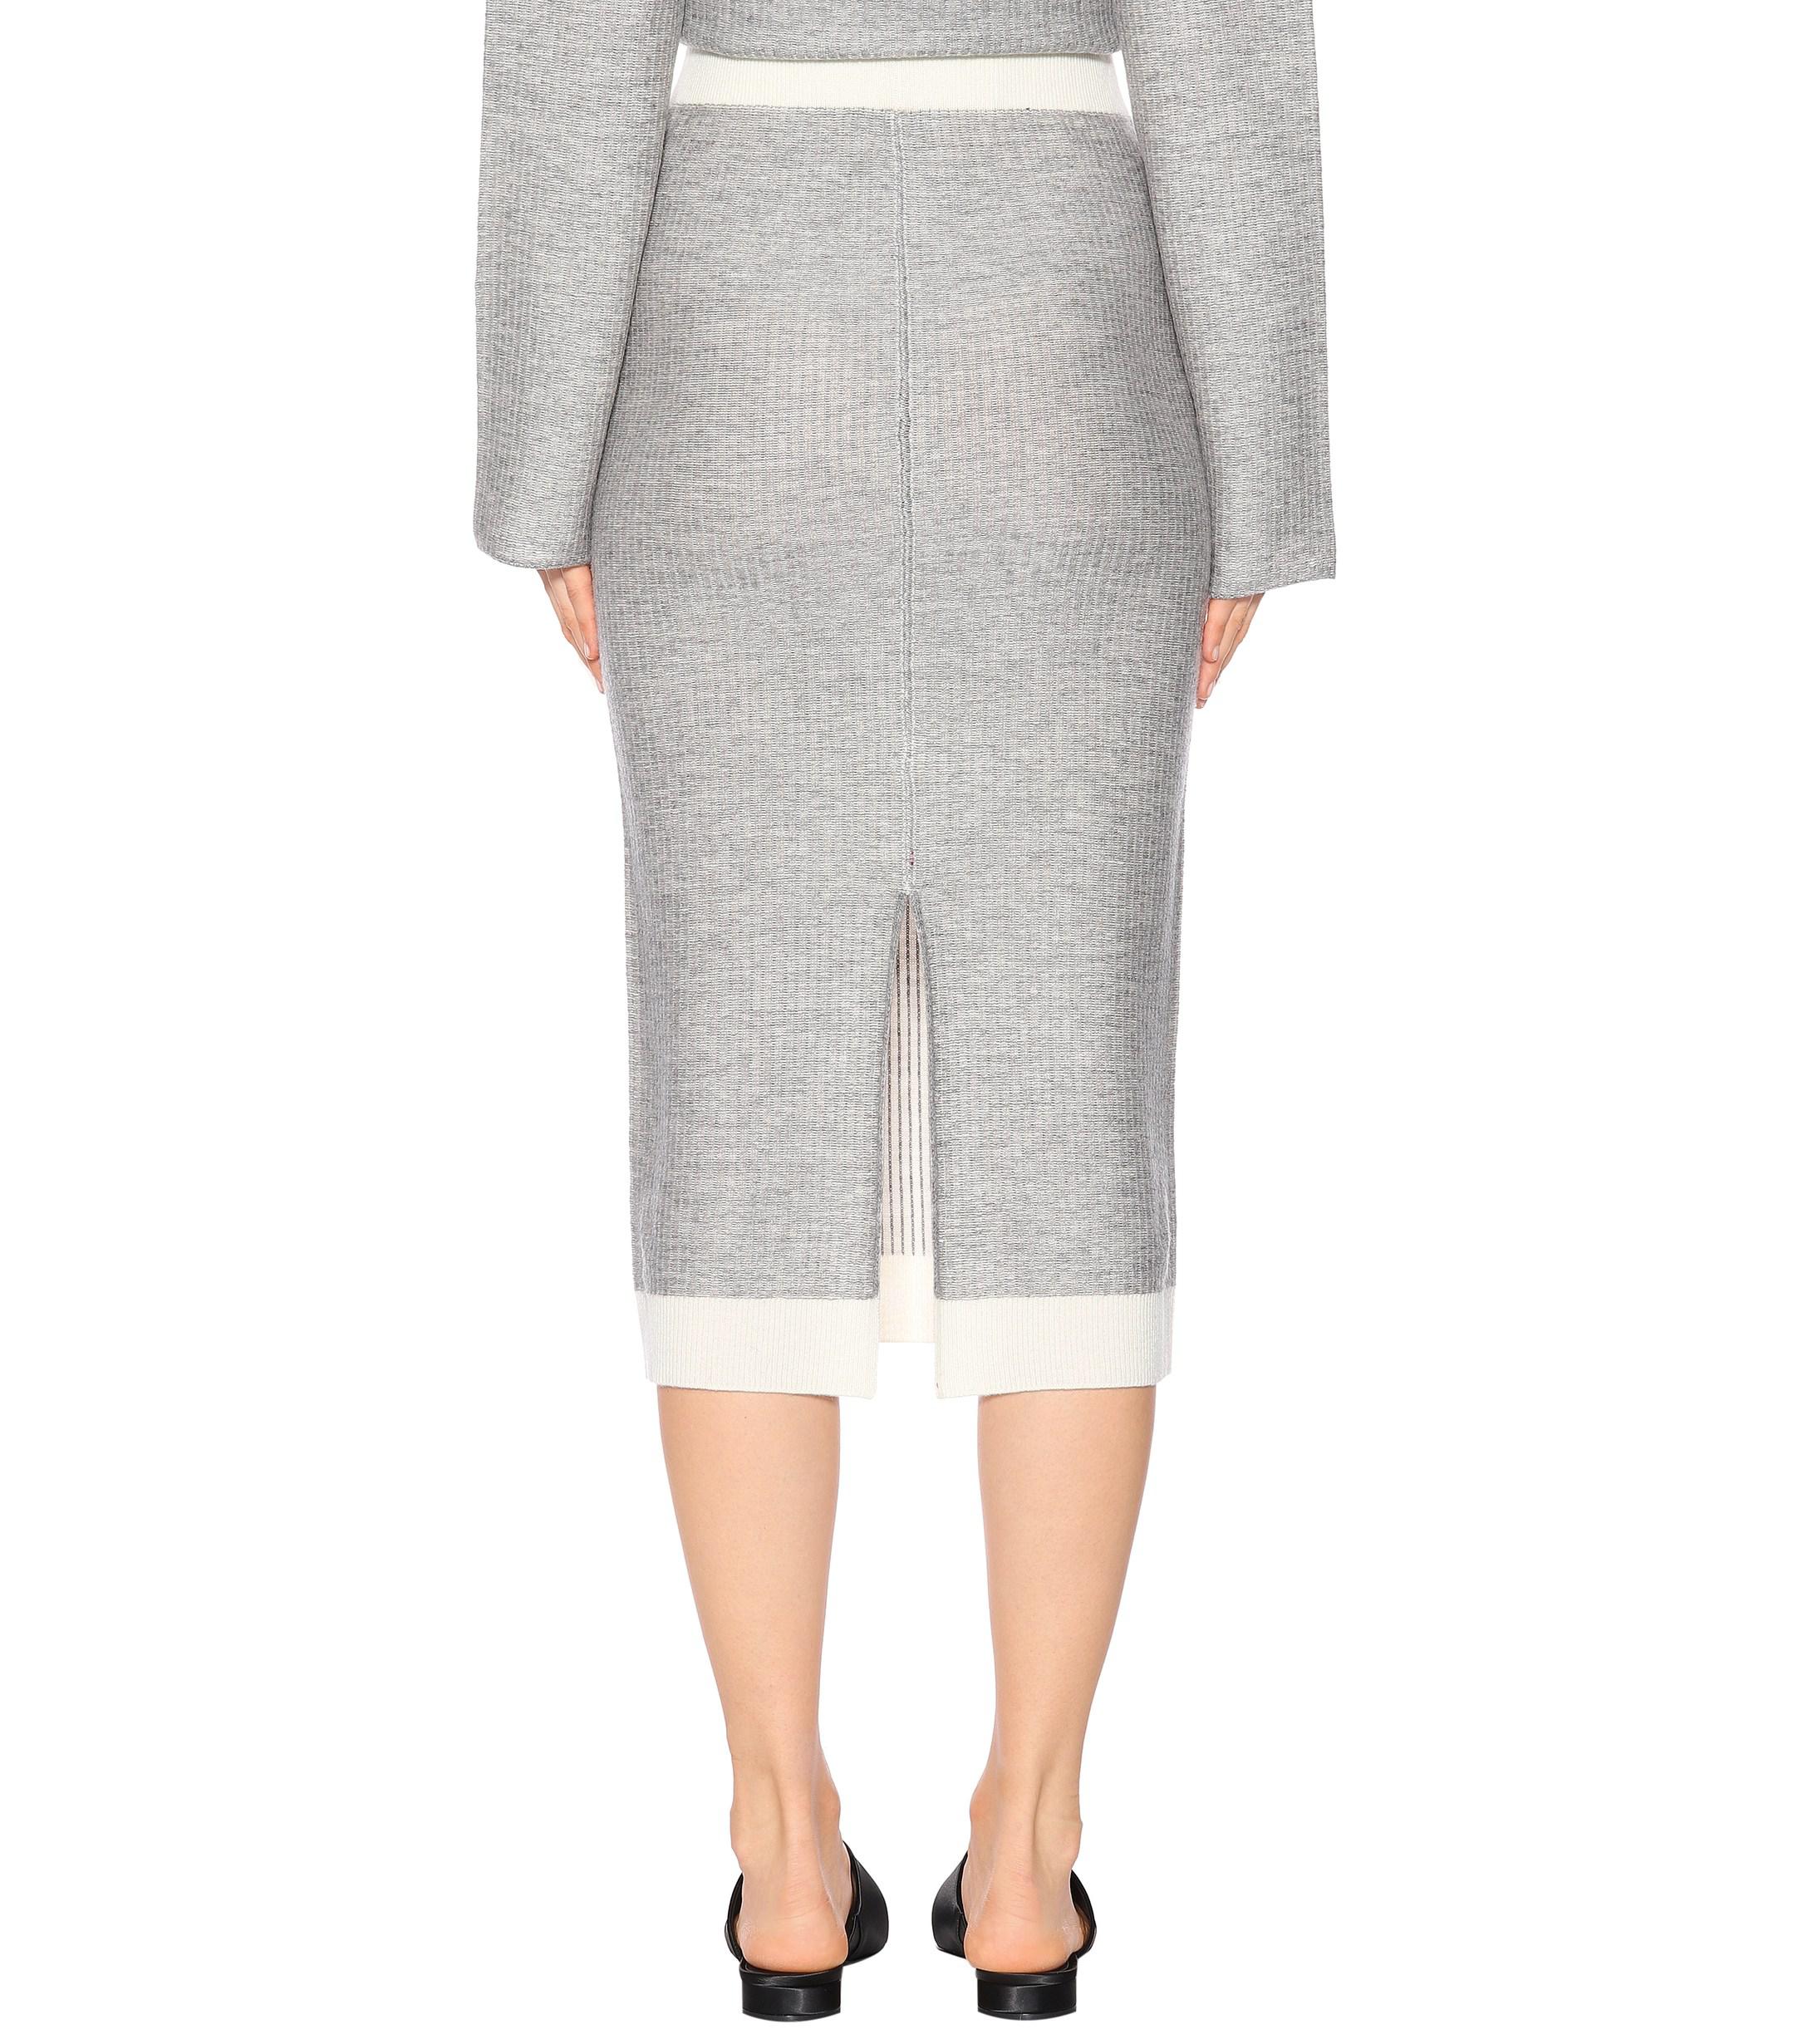 ATM Wool Skirt in Grey (Gray) - Lyst